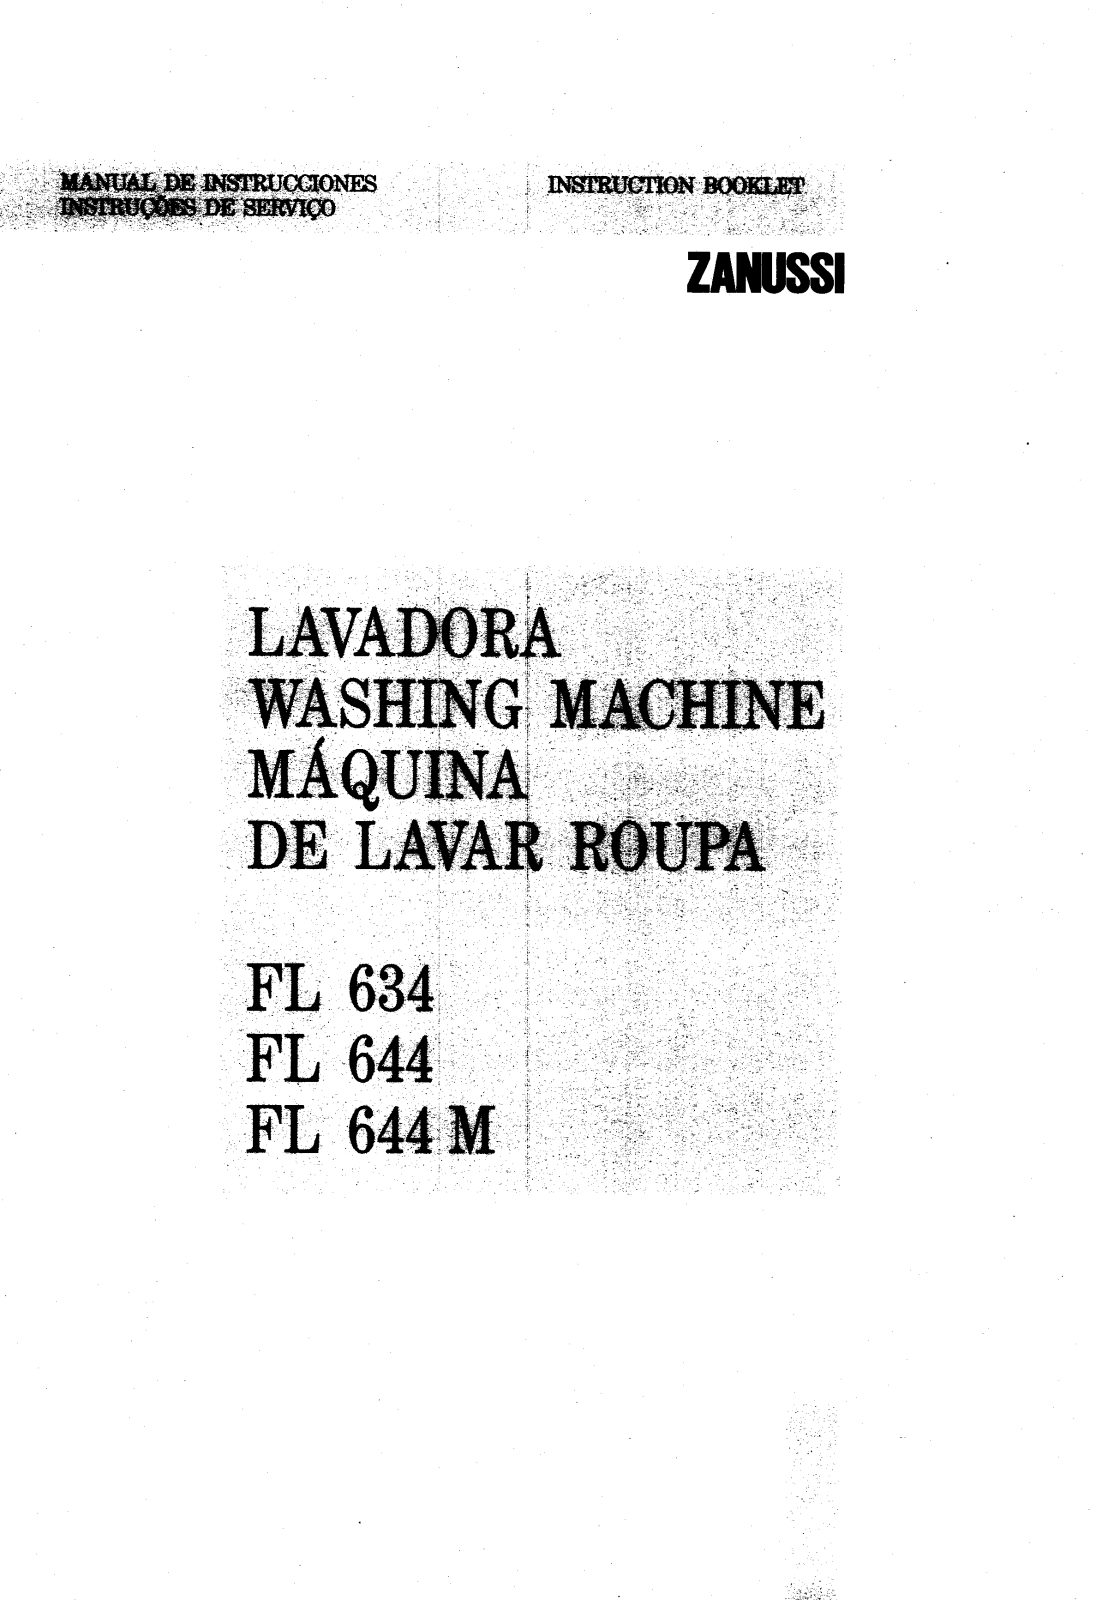 Zanussi fl634, fl644, fl644m USER MANUAL